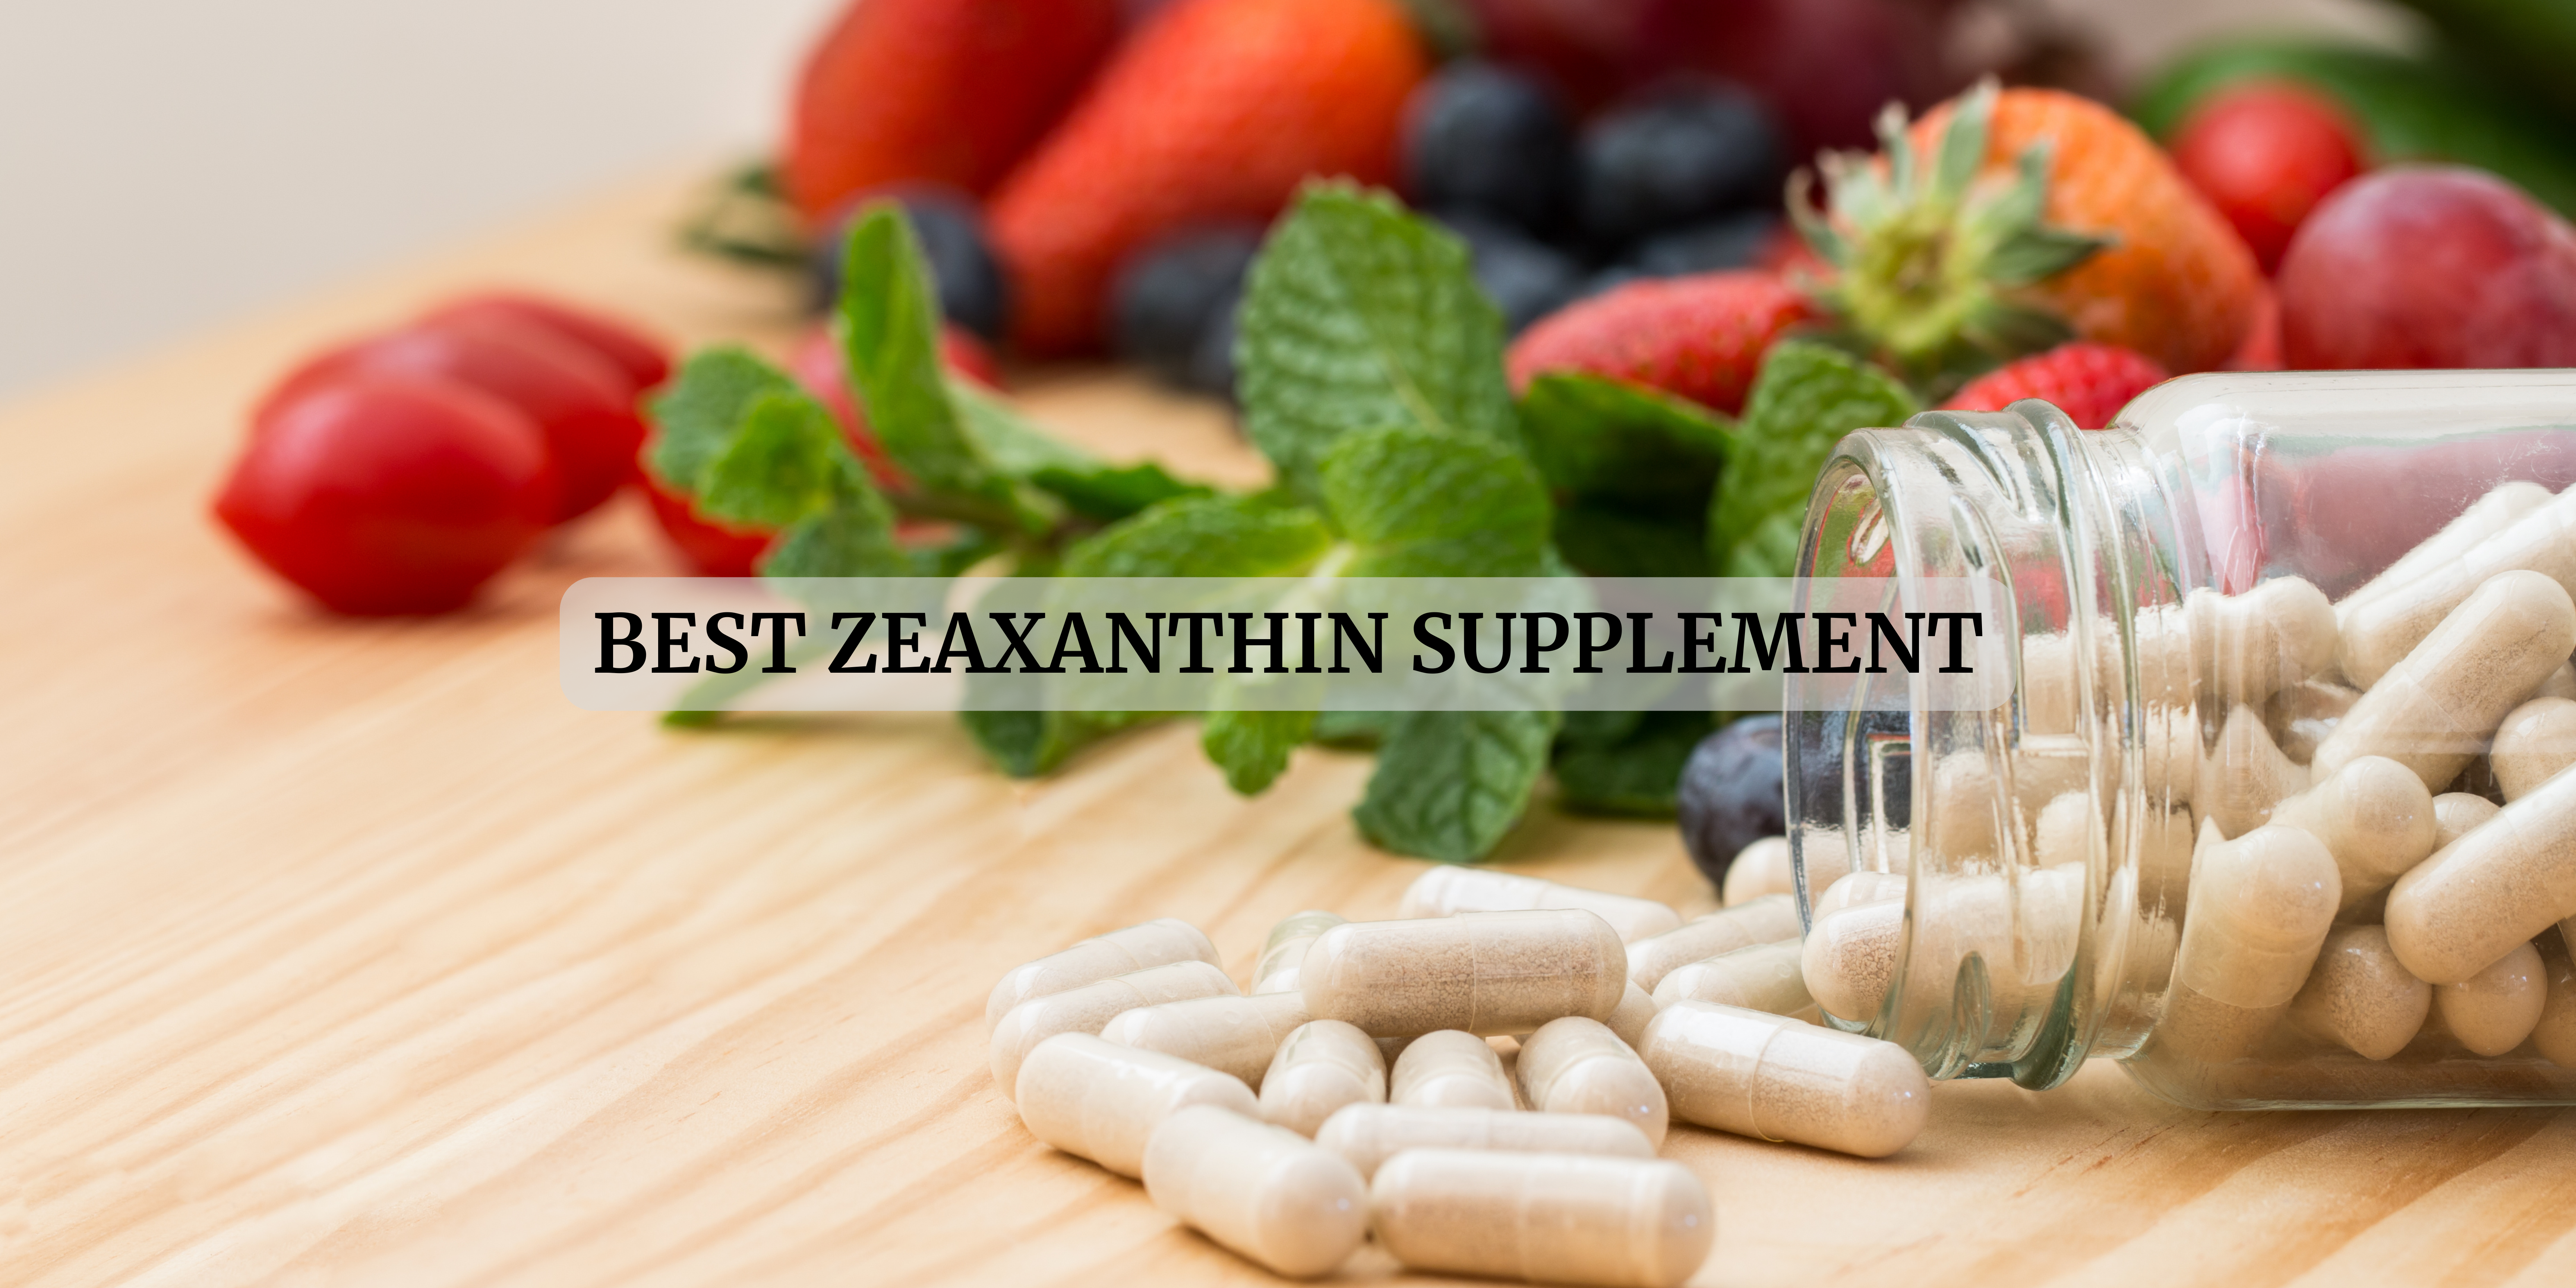 zeaxanthin supplement in Italy